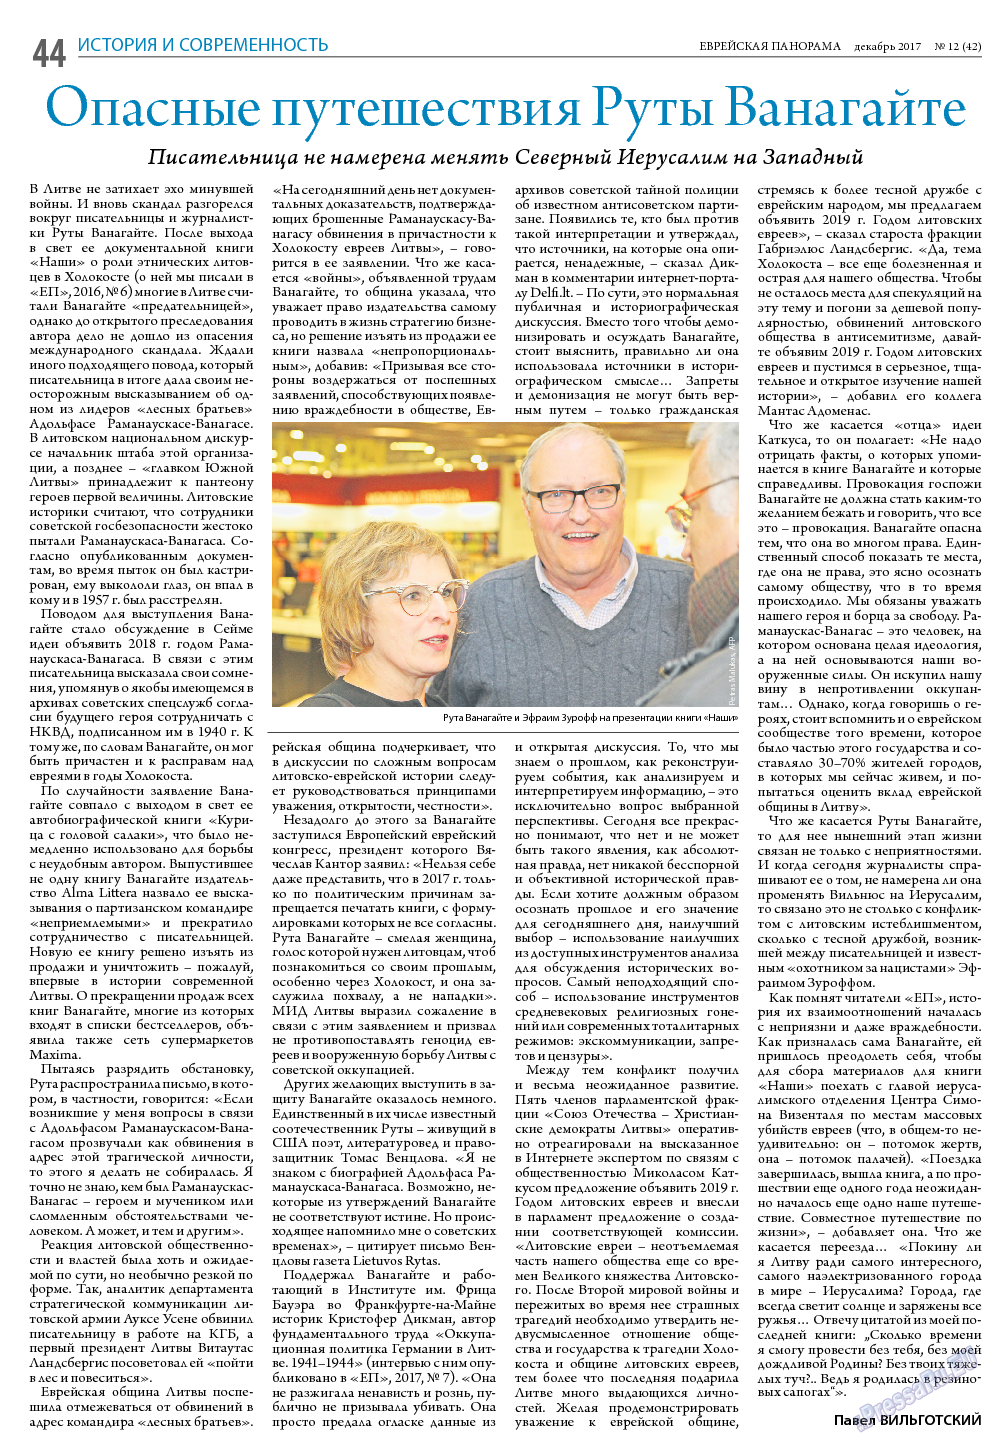 Еврейская панорама, газета. 2017 №12 стр.44